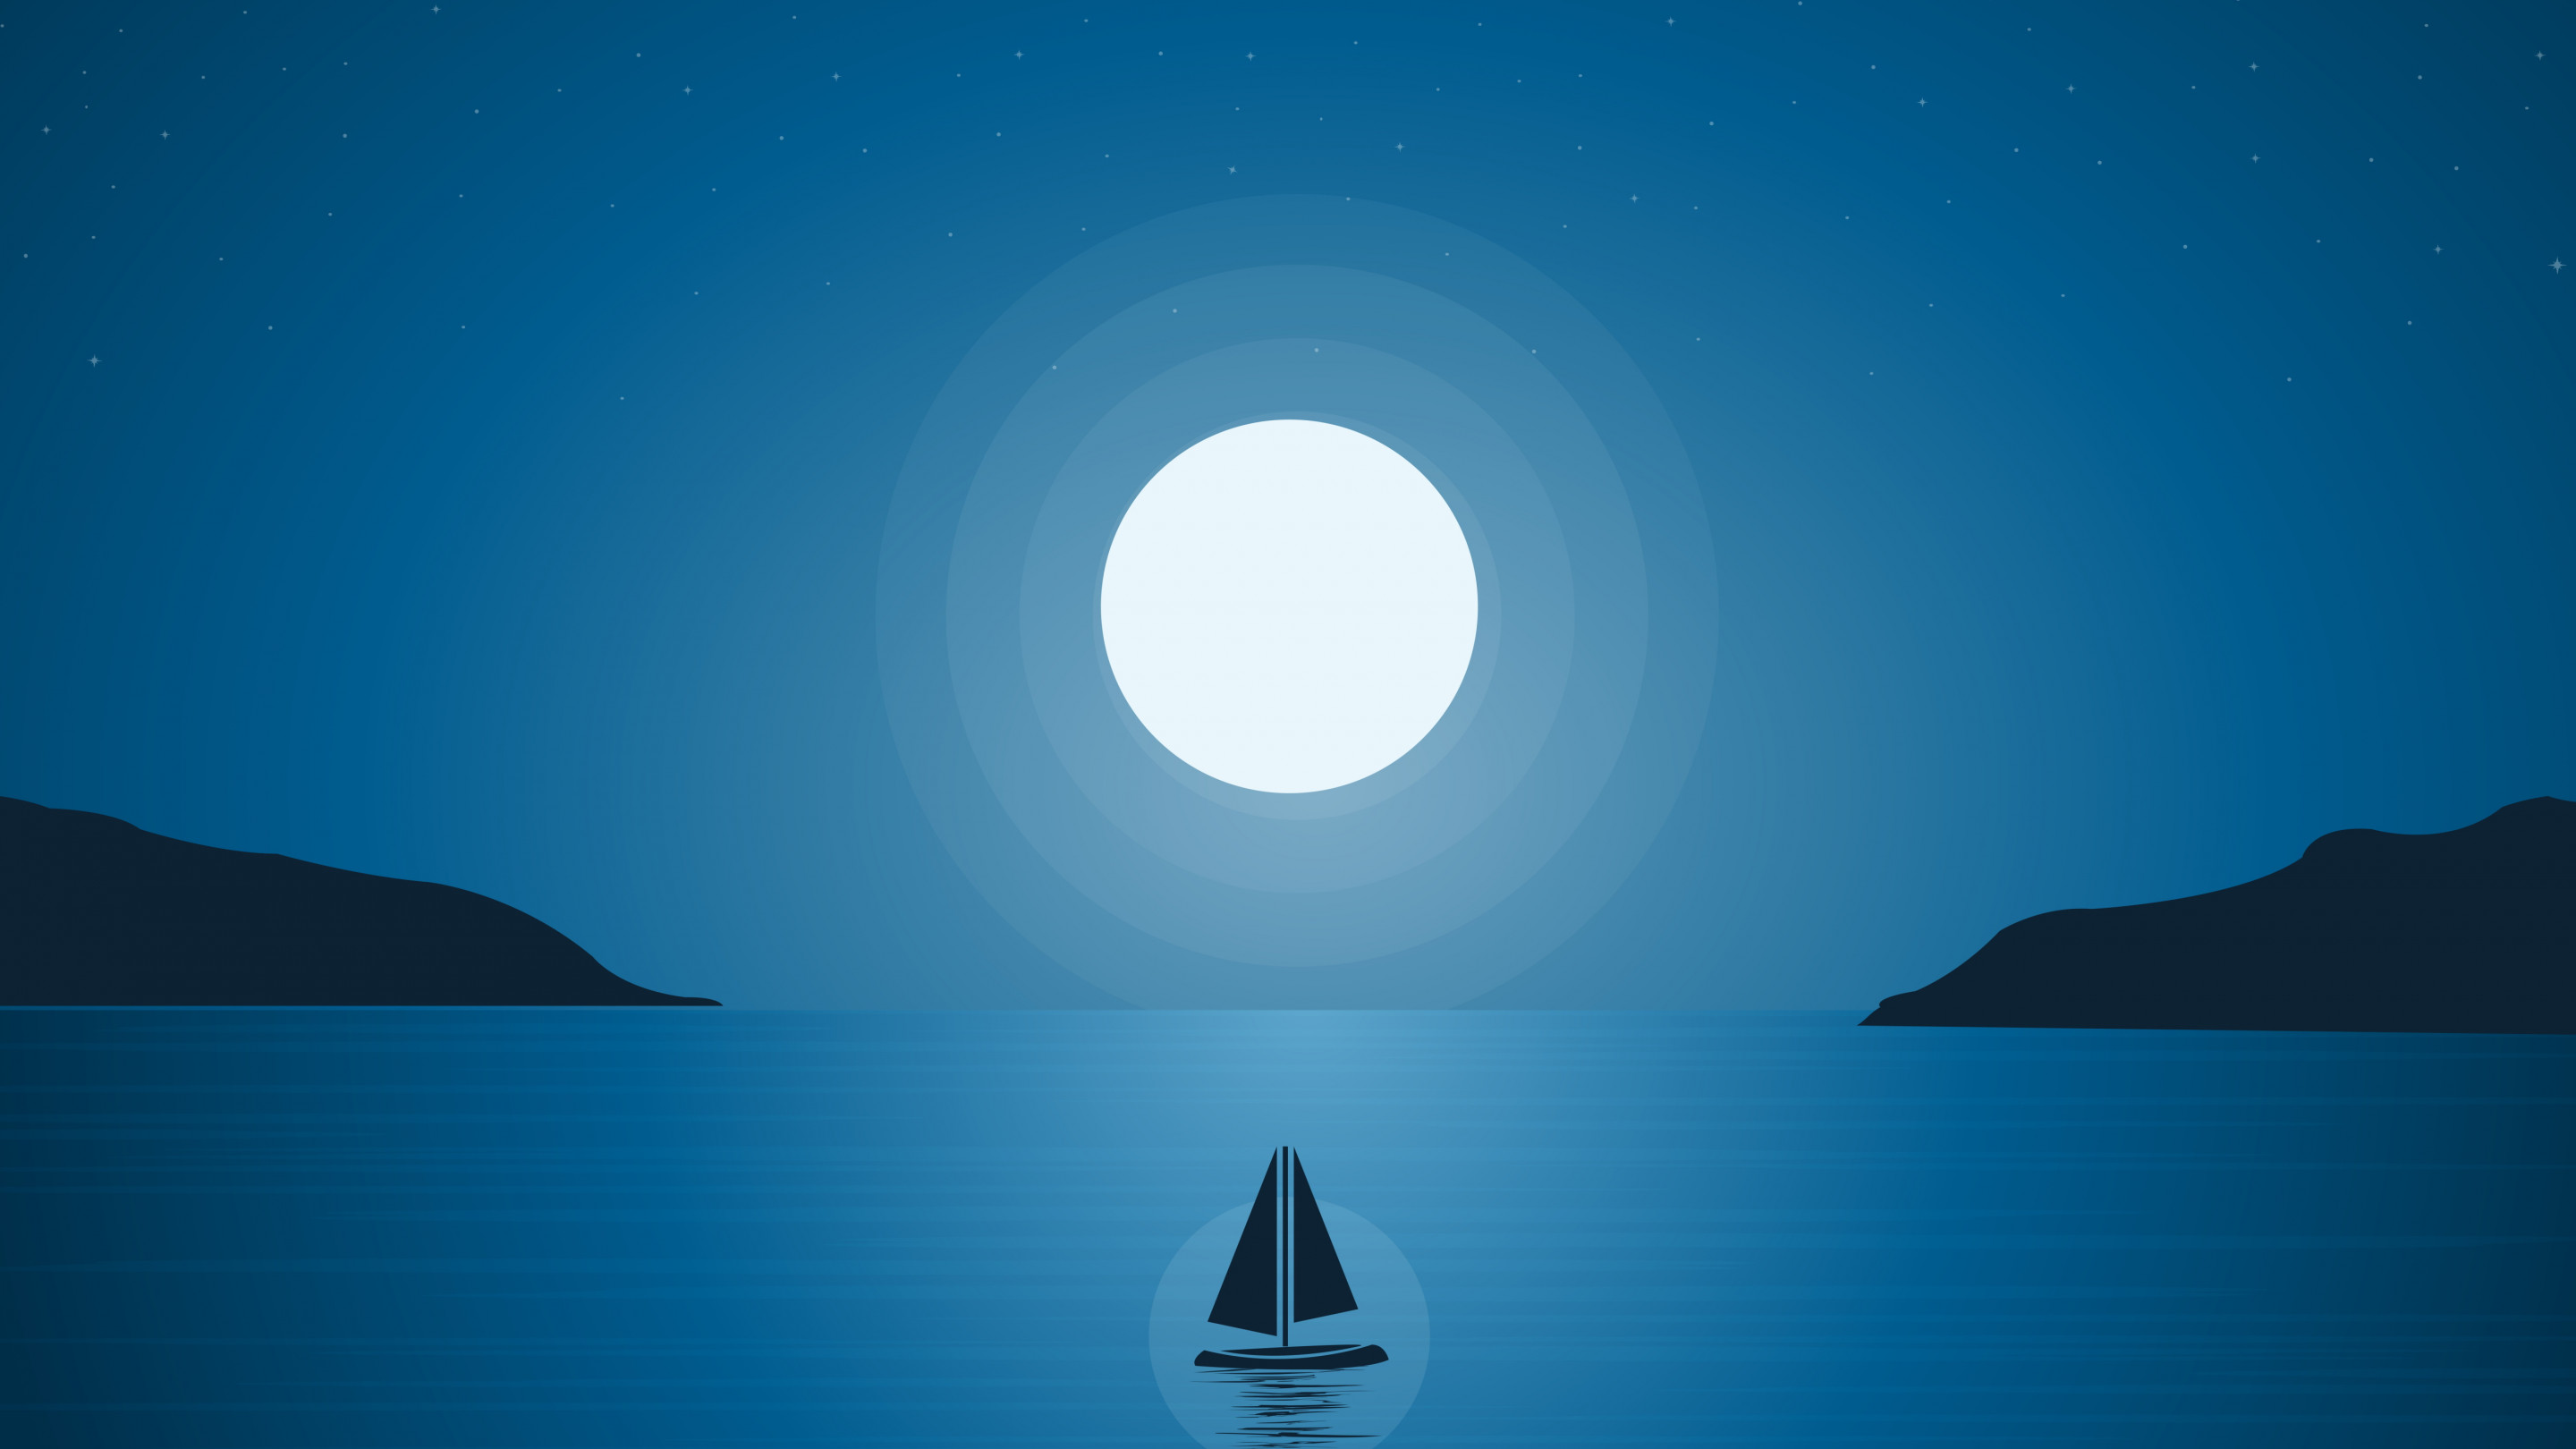 Boat trip under the moonlight wallpaper 2880x1620